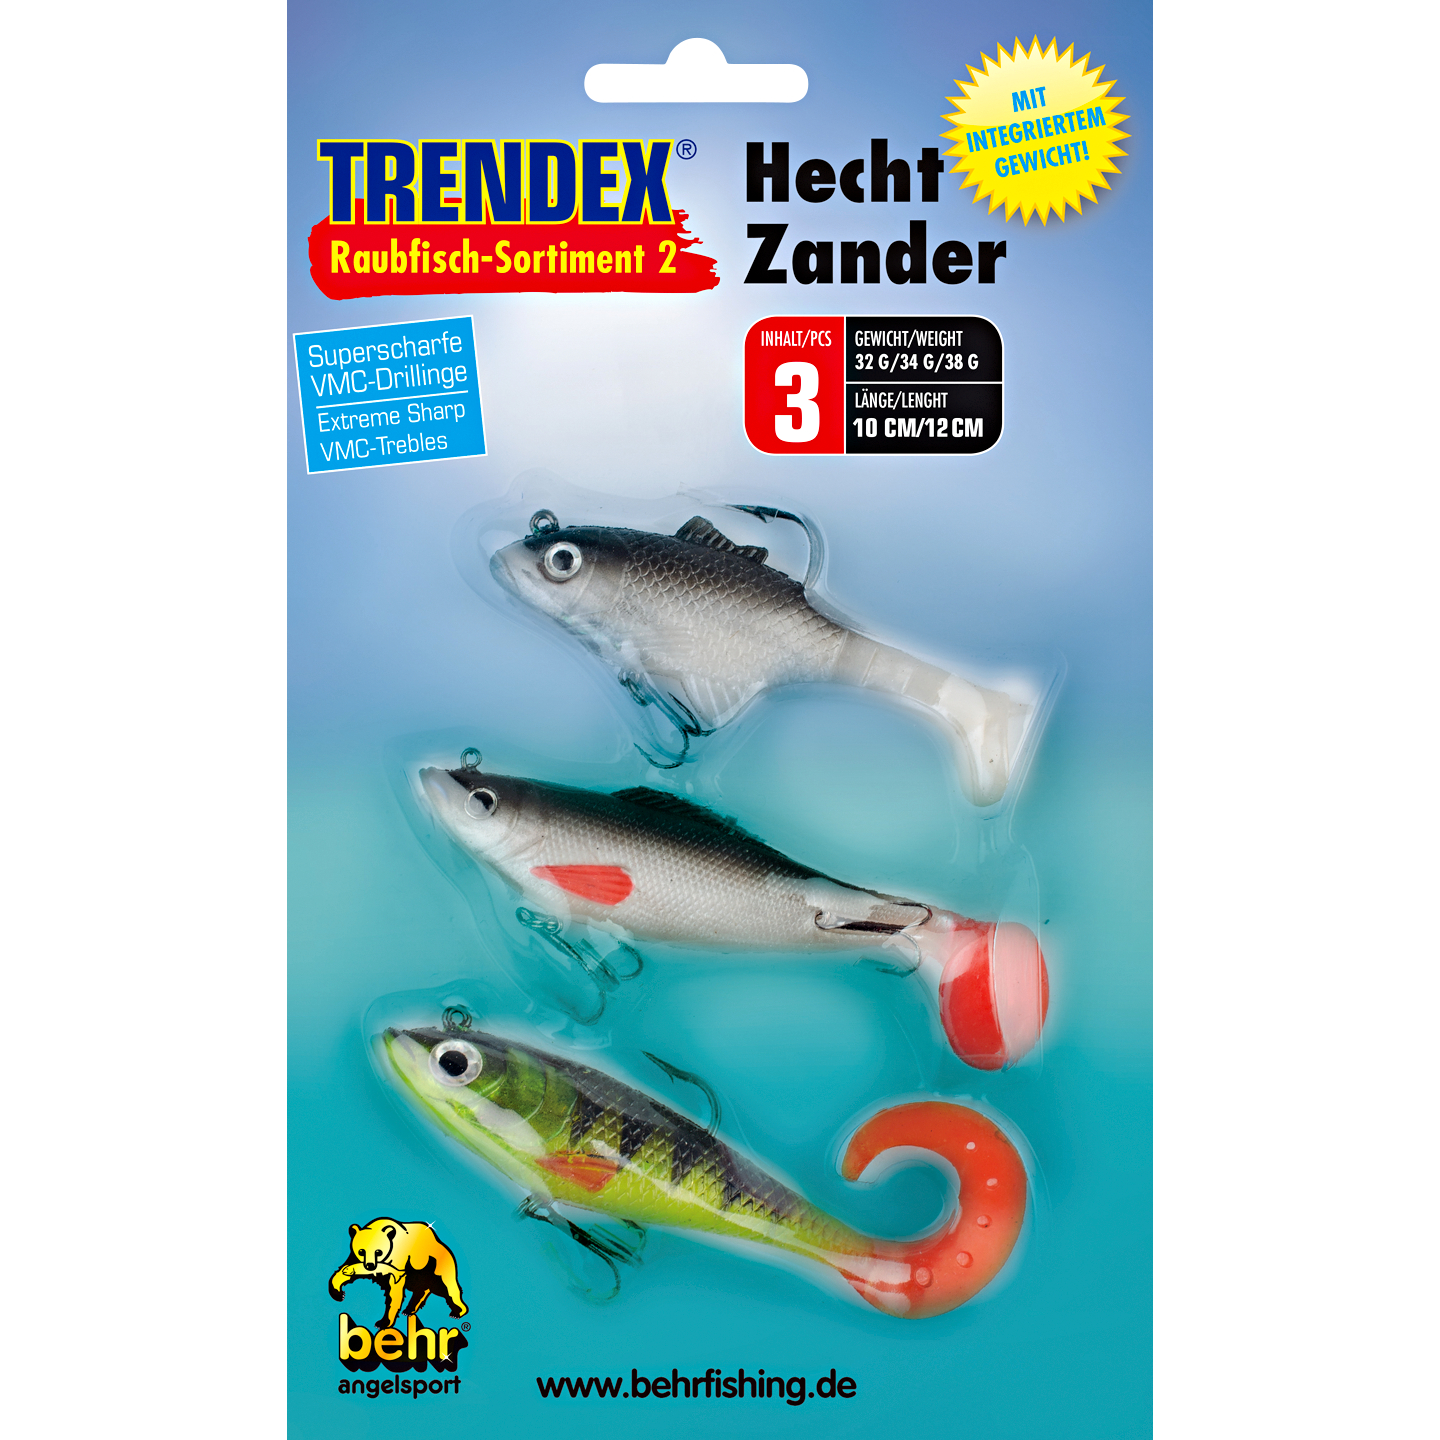 Trendex Raubfisch Jig-Sortiment 2 (Hecht/Zander) 